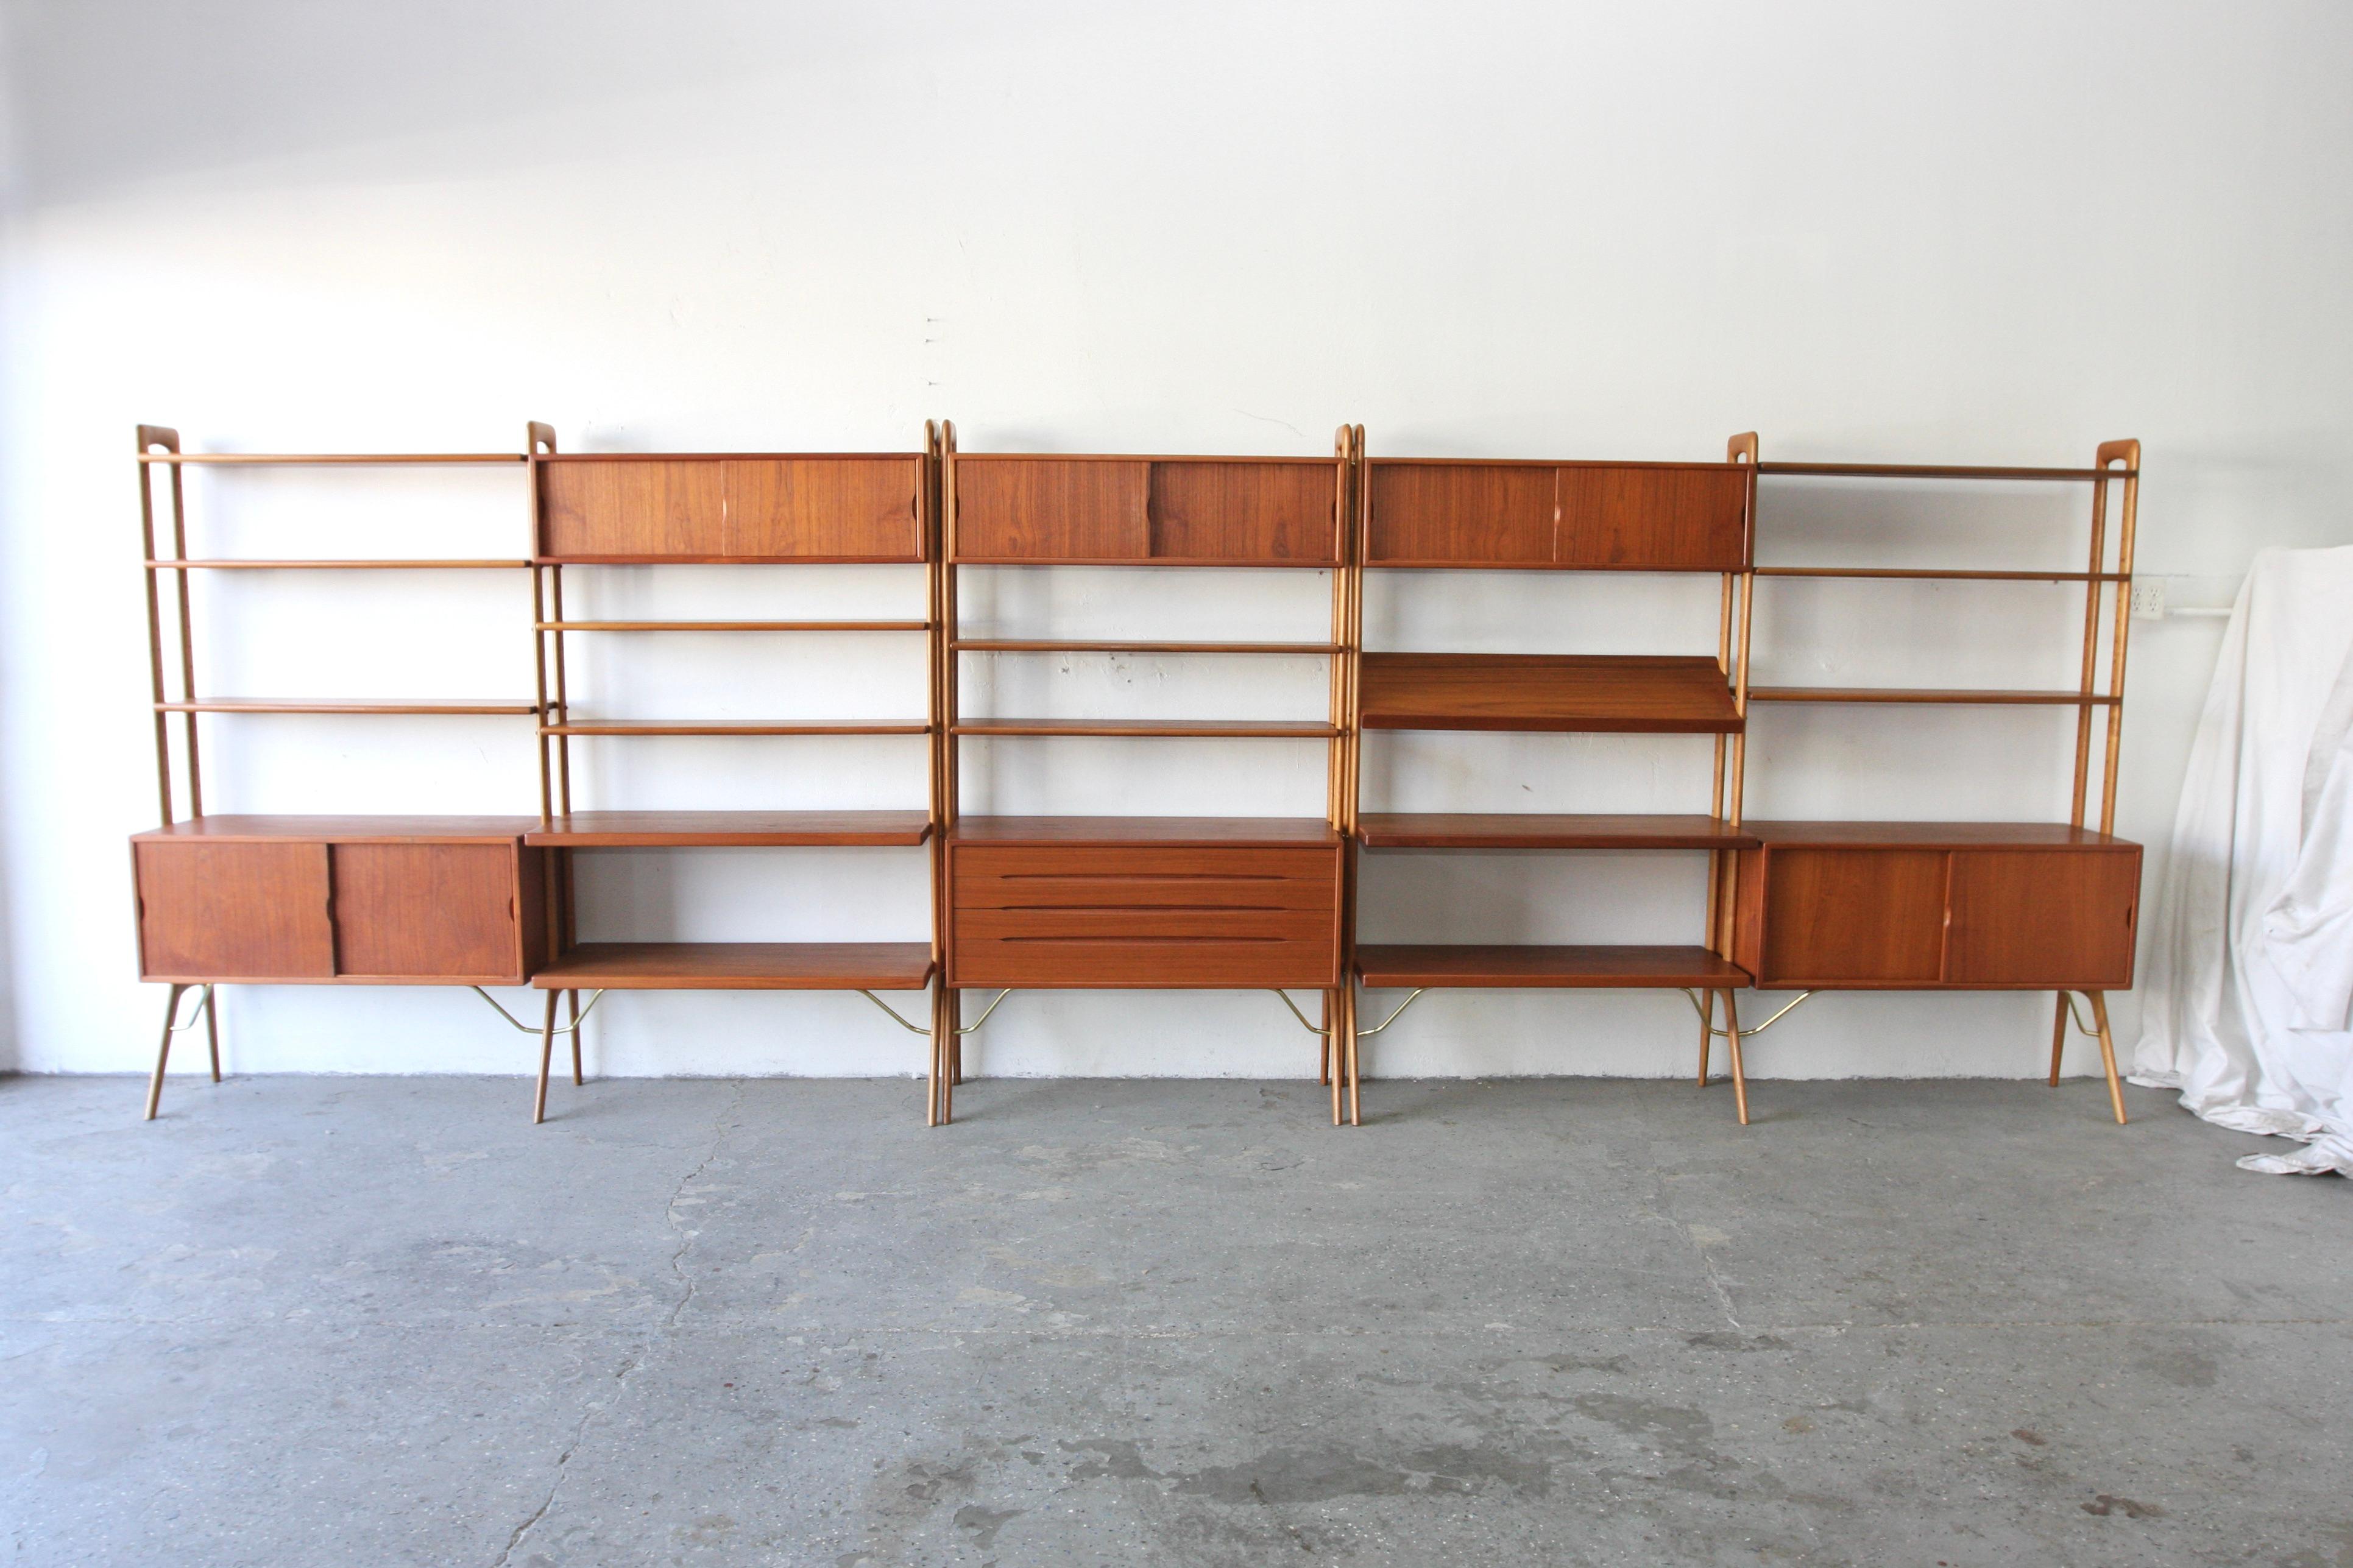 2 Bay Danish Modern Kurt Ostervig Teak Wall Unit Room Divider or Book Shelves #2 4